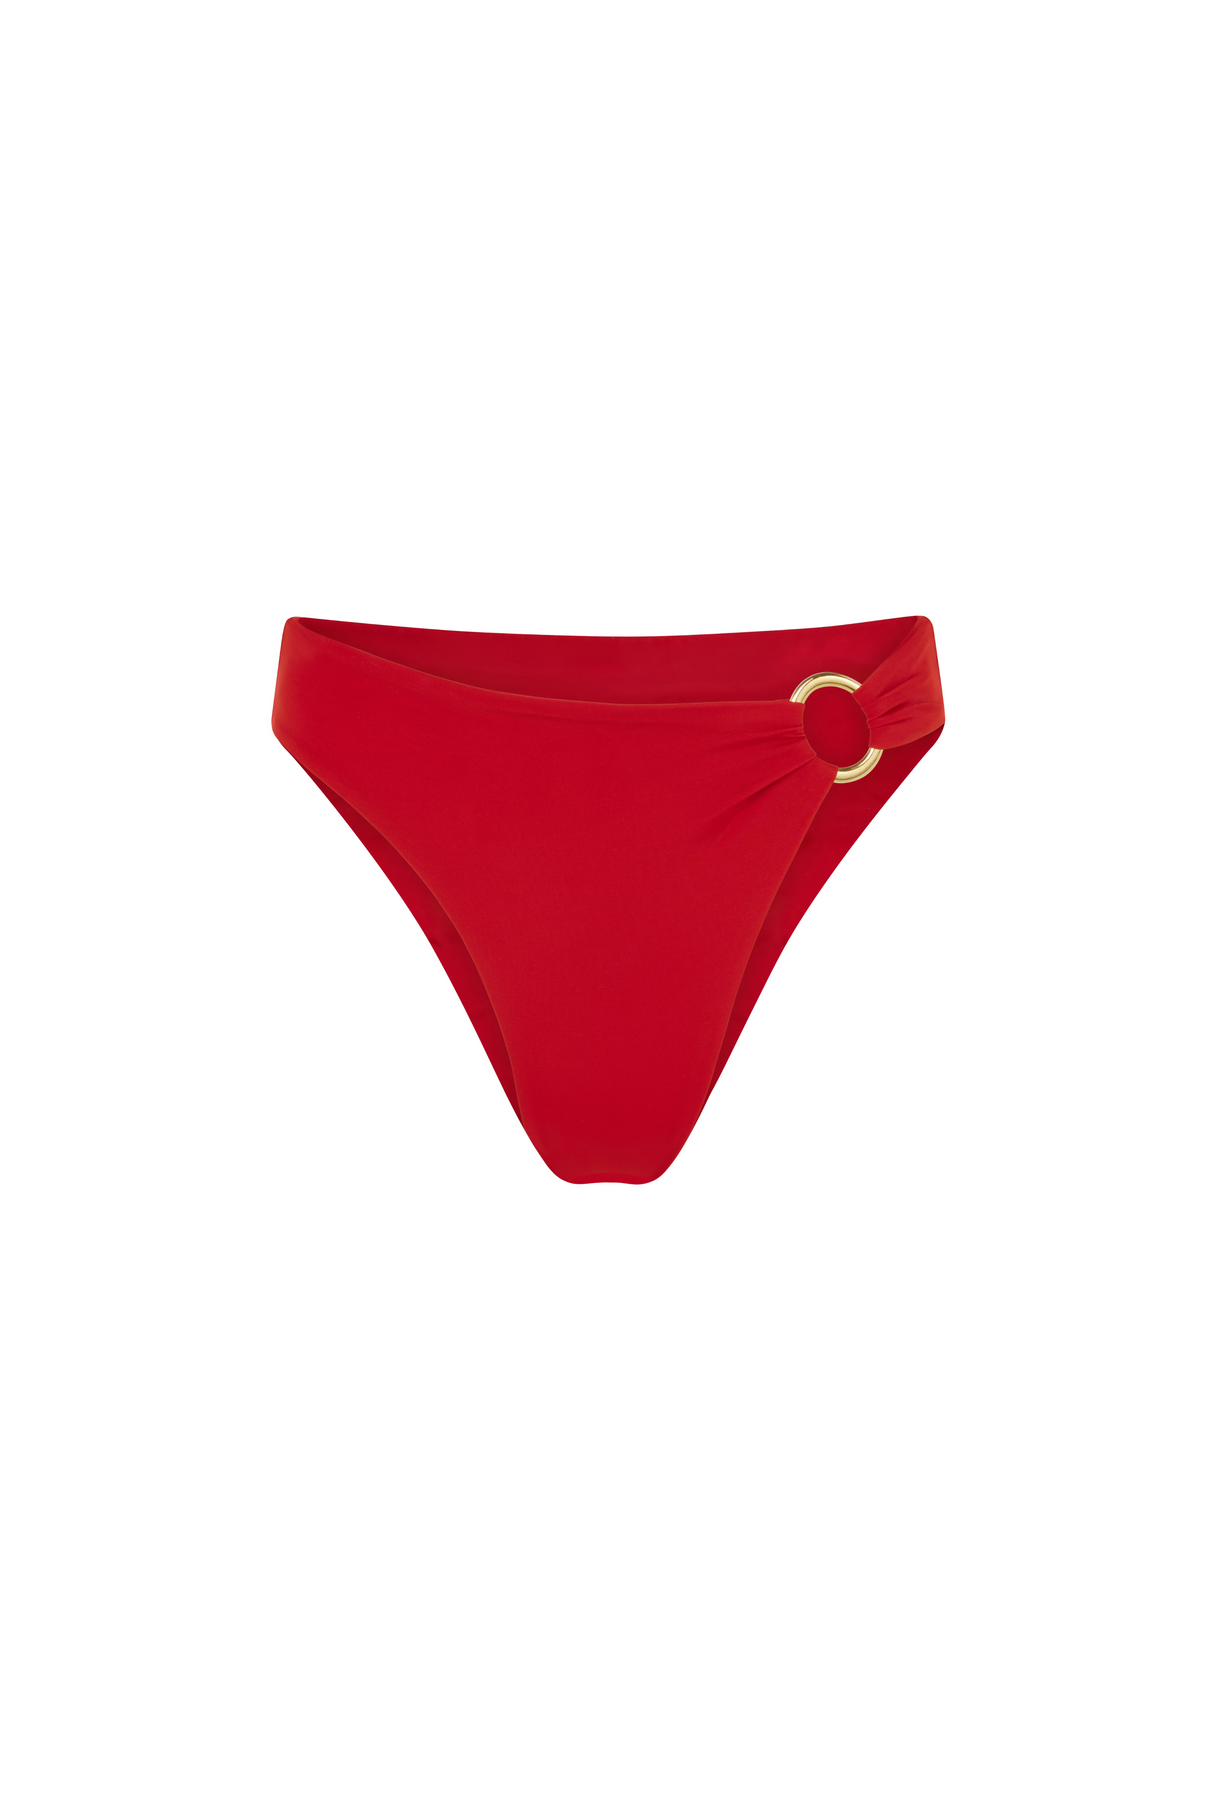 Acapulco High Waist Cheeky Bikini Bottom - Red – AWAY THAT DAY